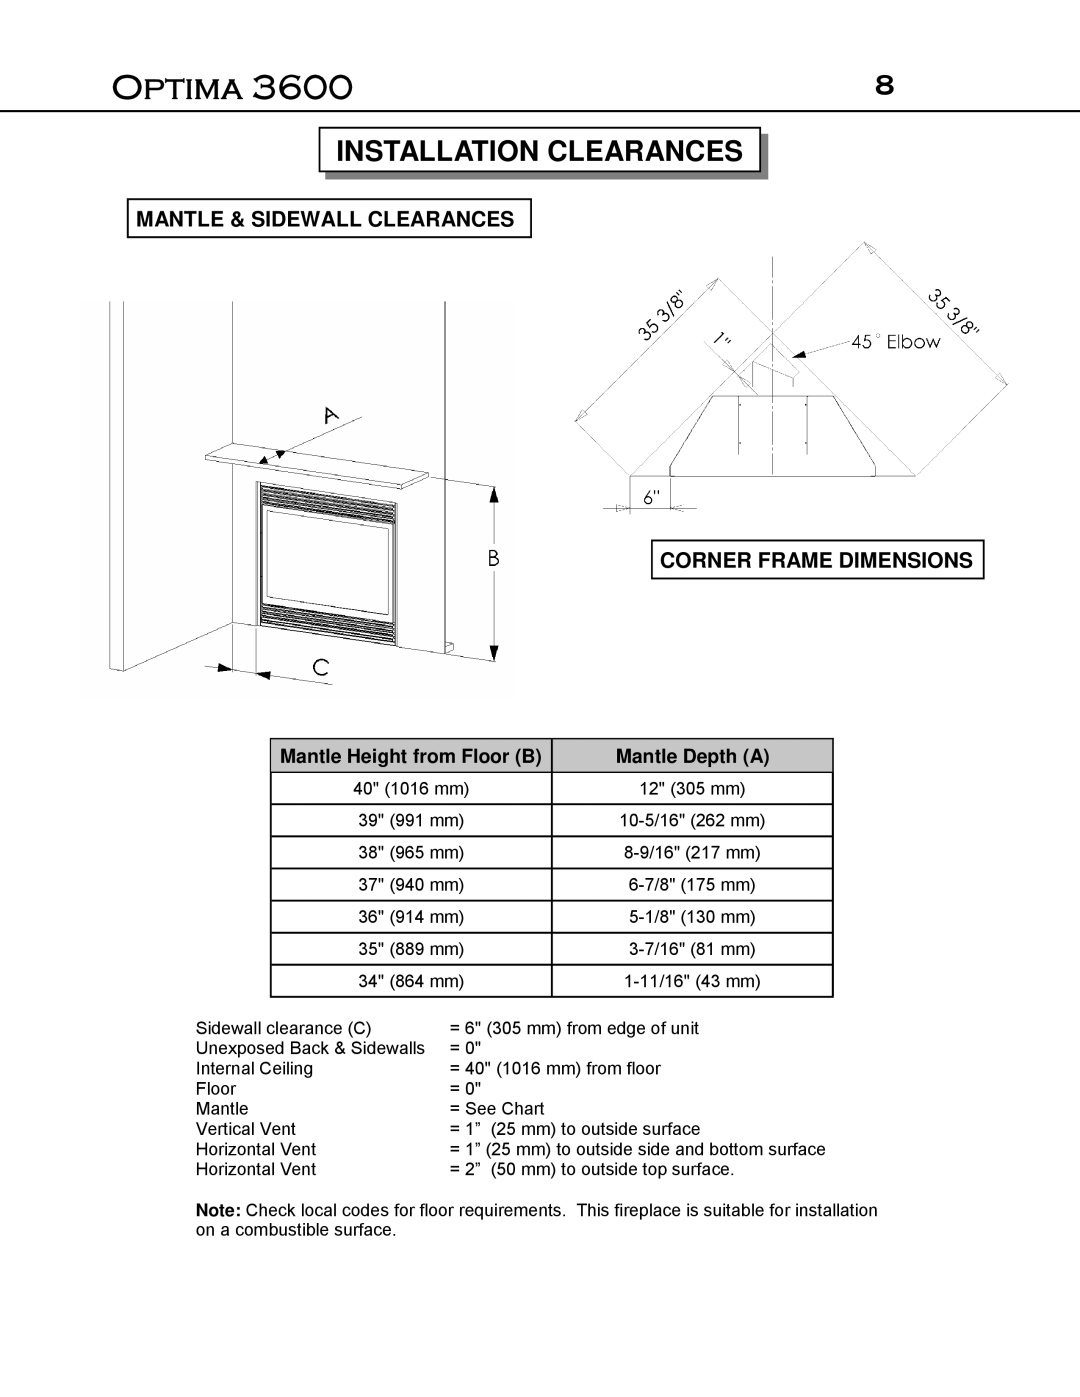 Optima Company Optima 3600O manual Installation Clearances, Mantle & Sidewall Clearances, Corner Frame Dimensions 